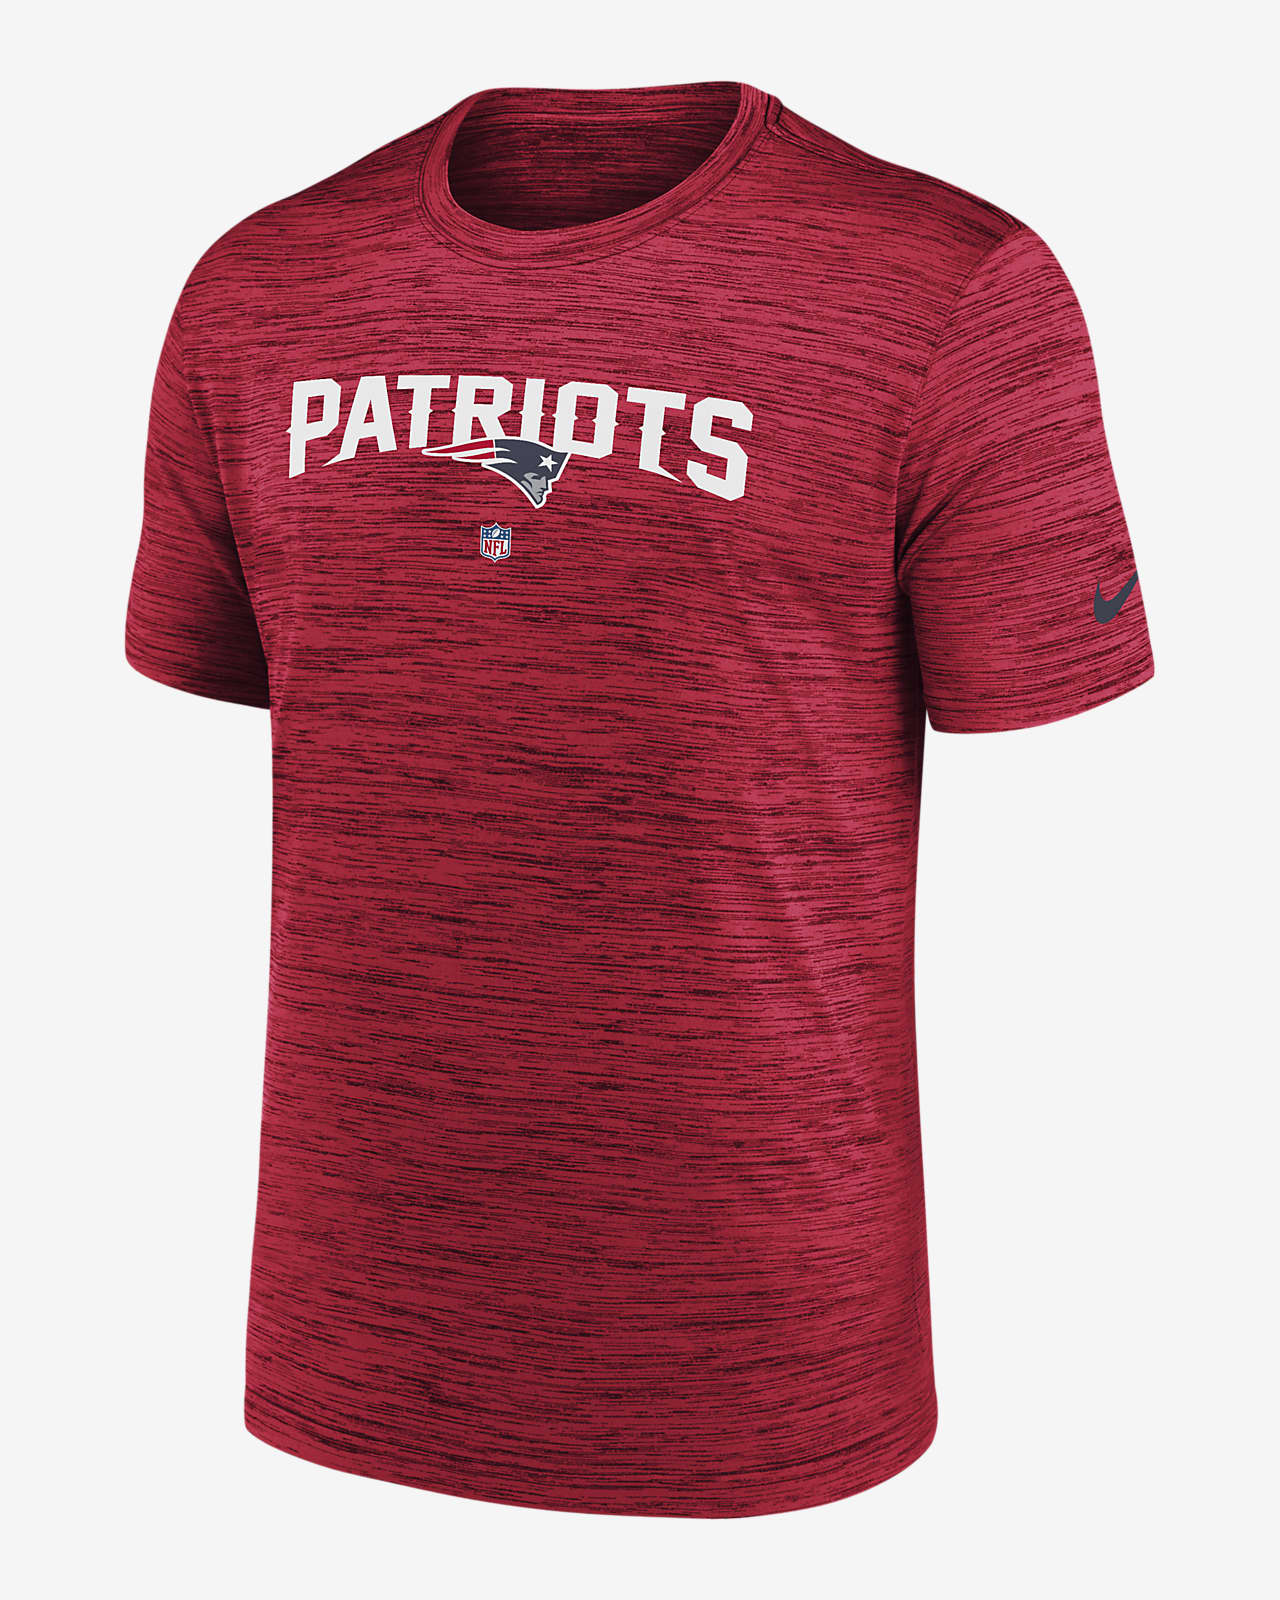 Nike Dri-FIT Sideline Velocity (NFL New England Patriots) Men's T-Shirt